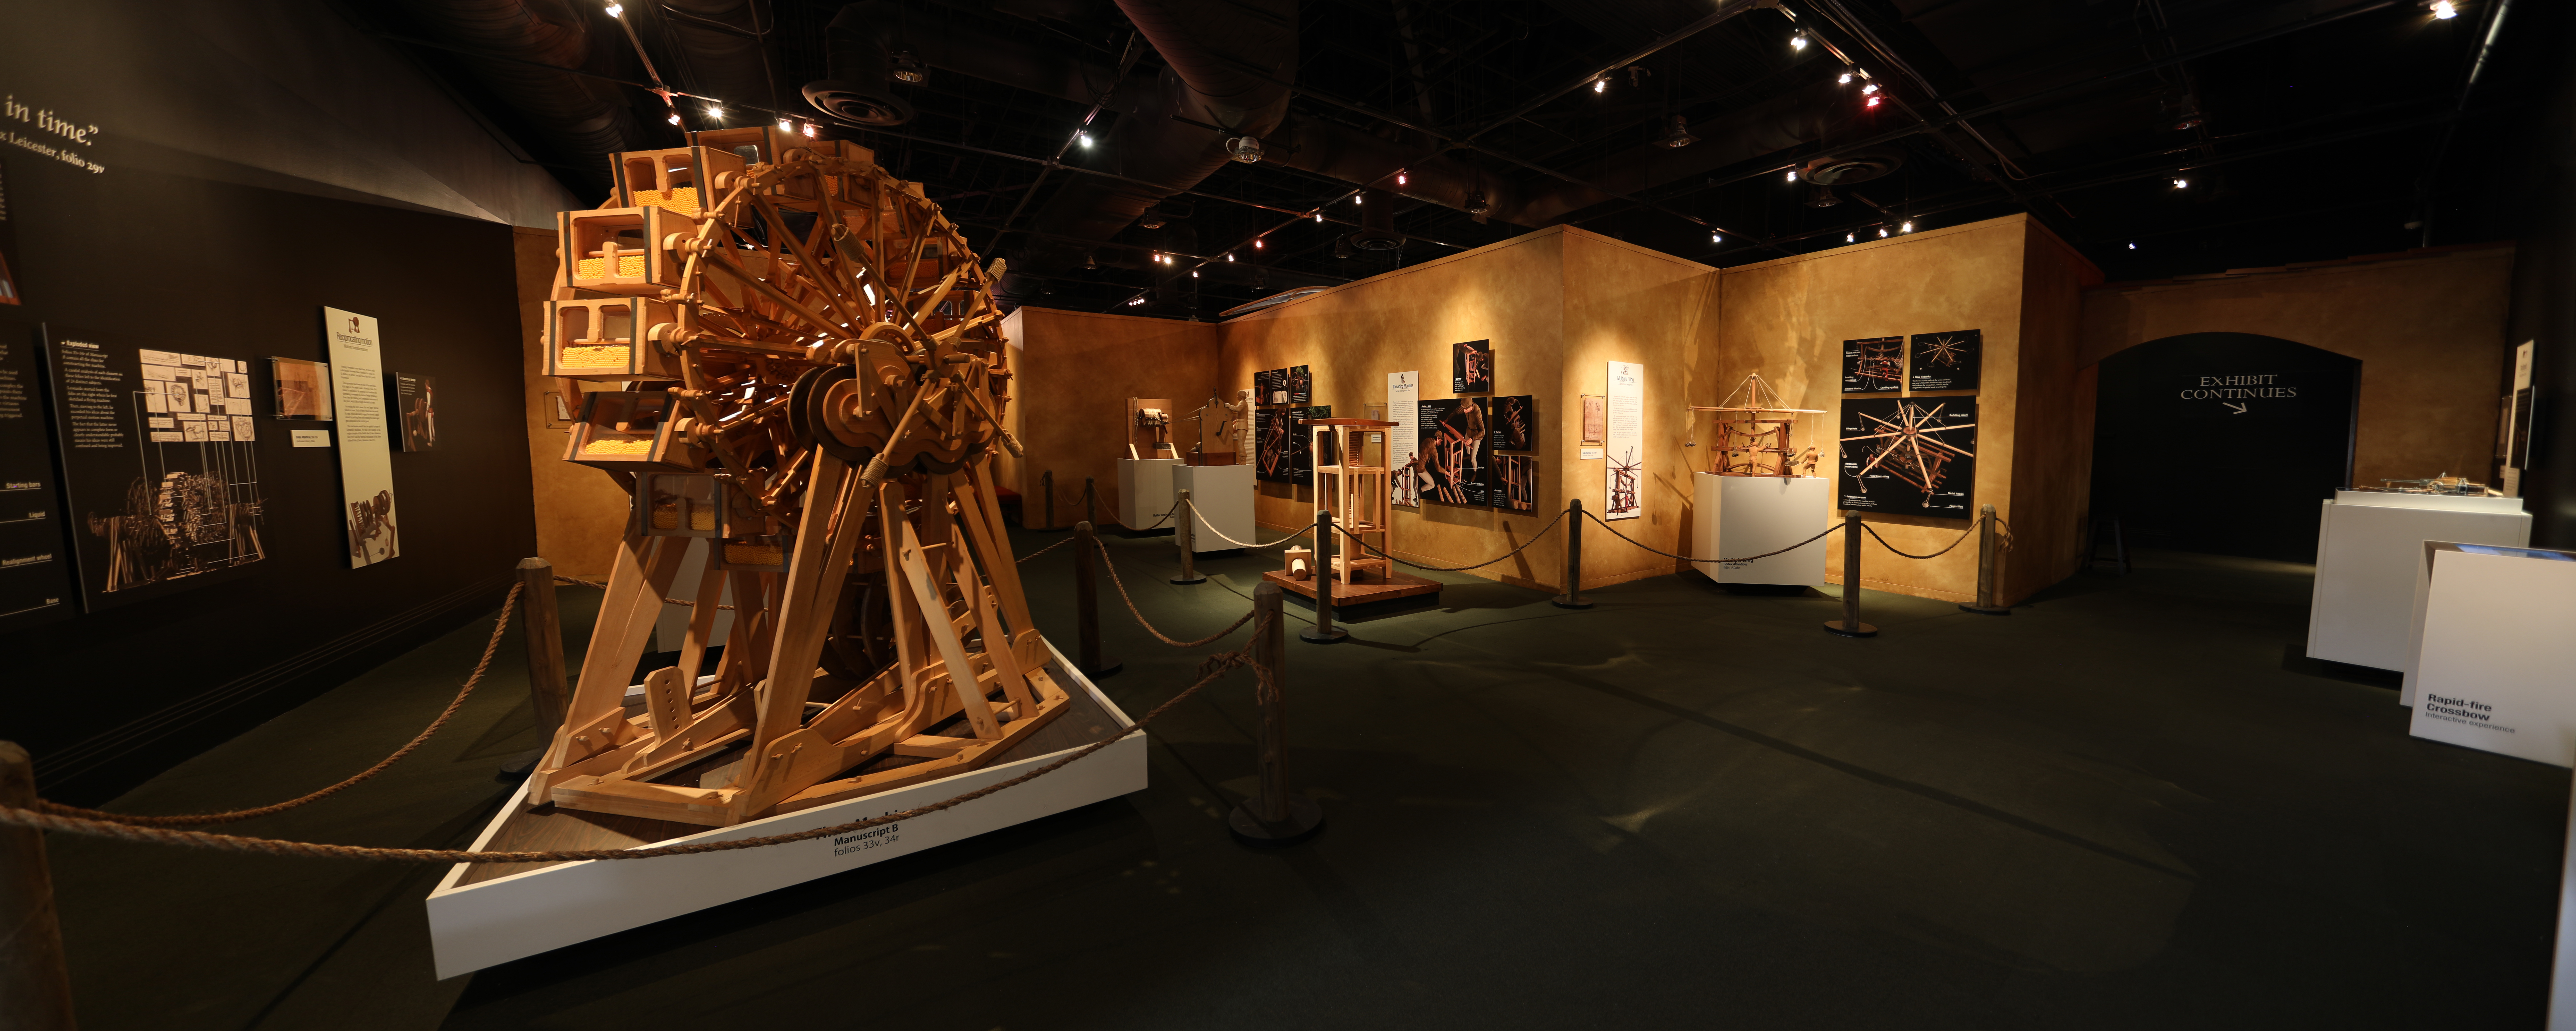 Panorama of the Da Vinci exhibition.